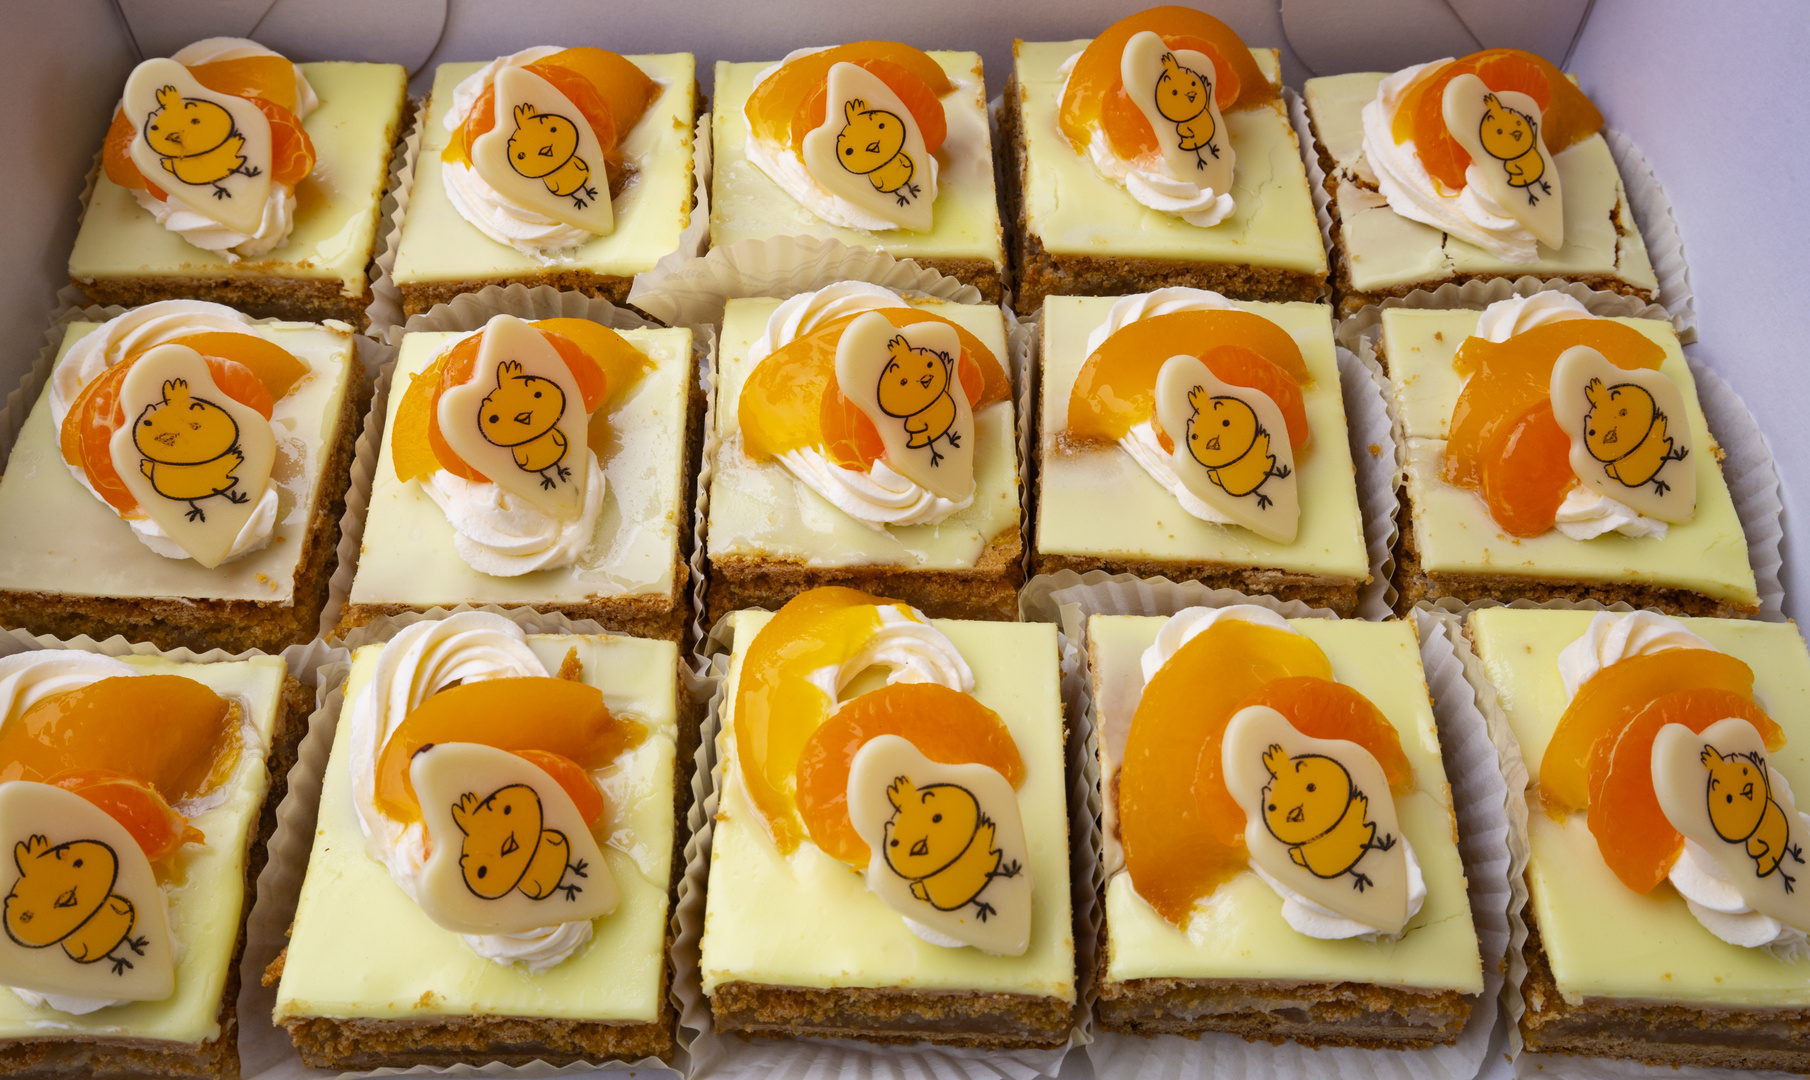 Oranje koek für 2,50 Euro in Alkmaar